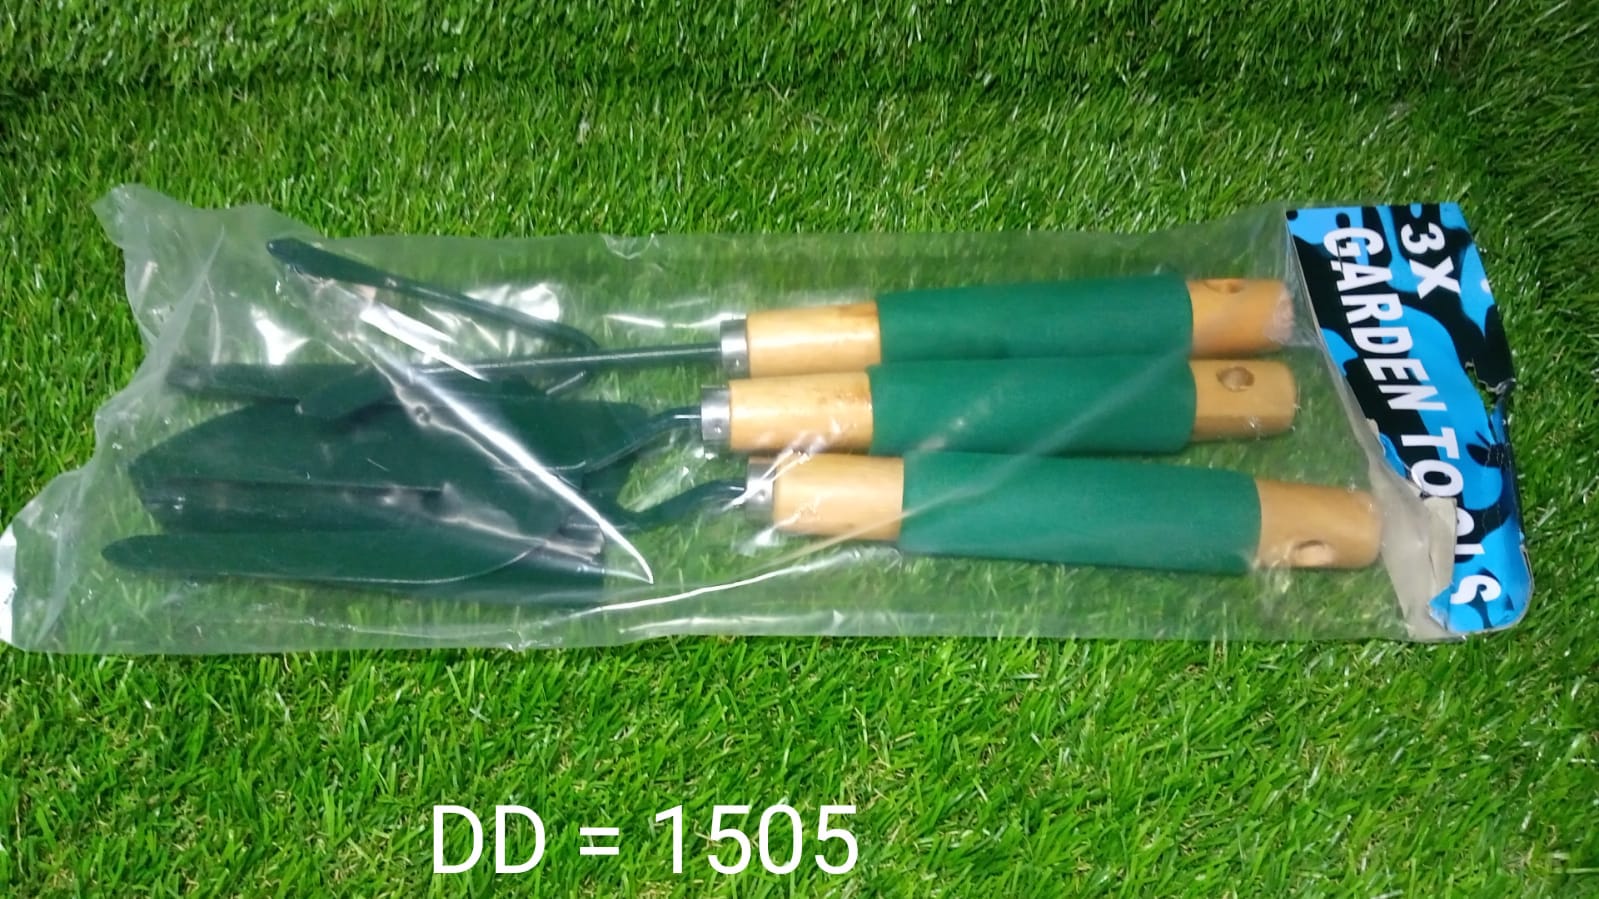 Gardening Tool Wood Handle Cultivator Trowel Forks Tool Set (3 pack)